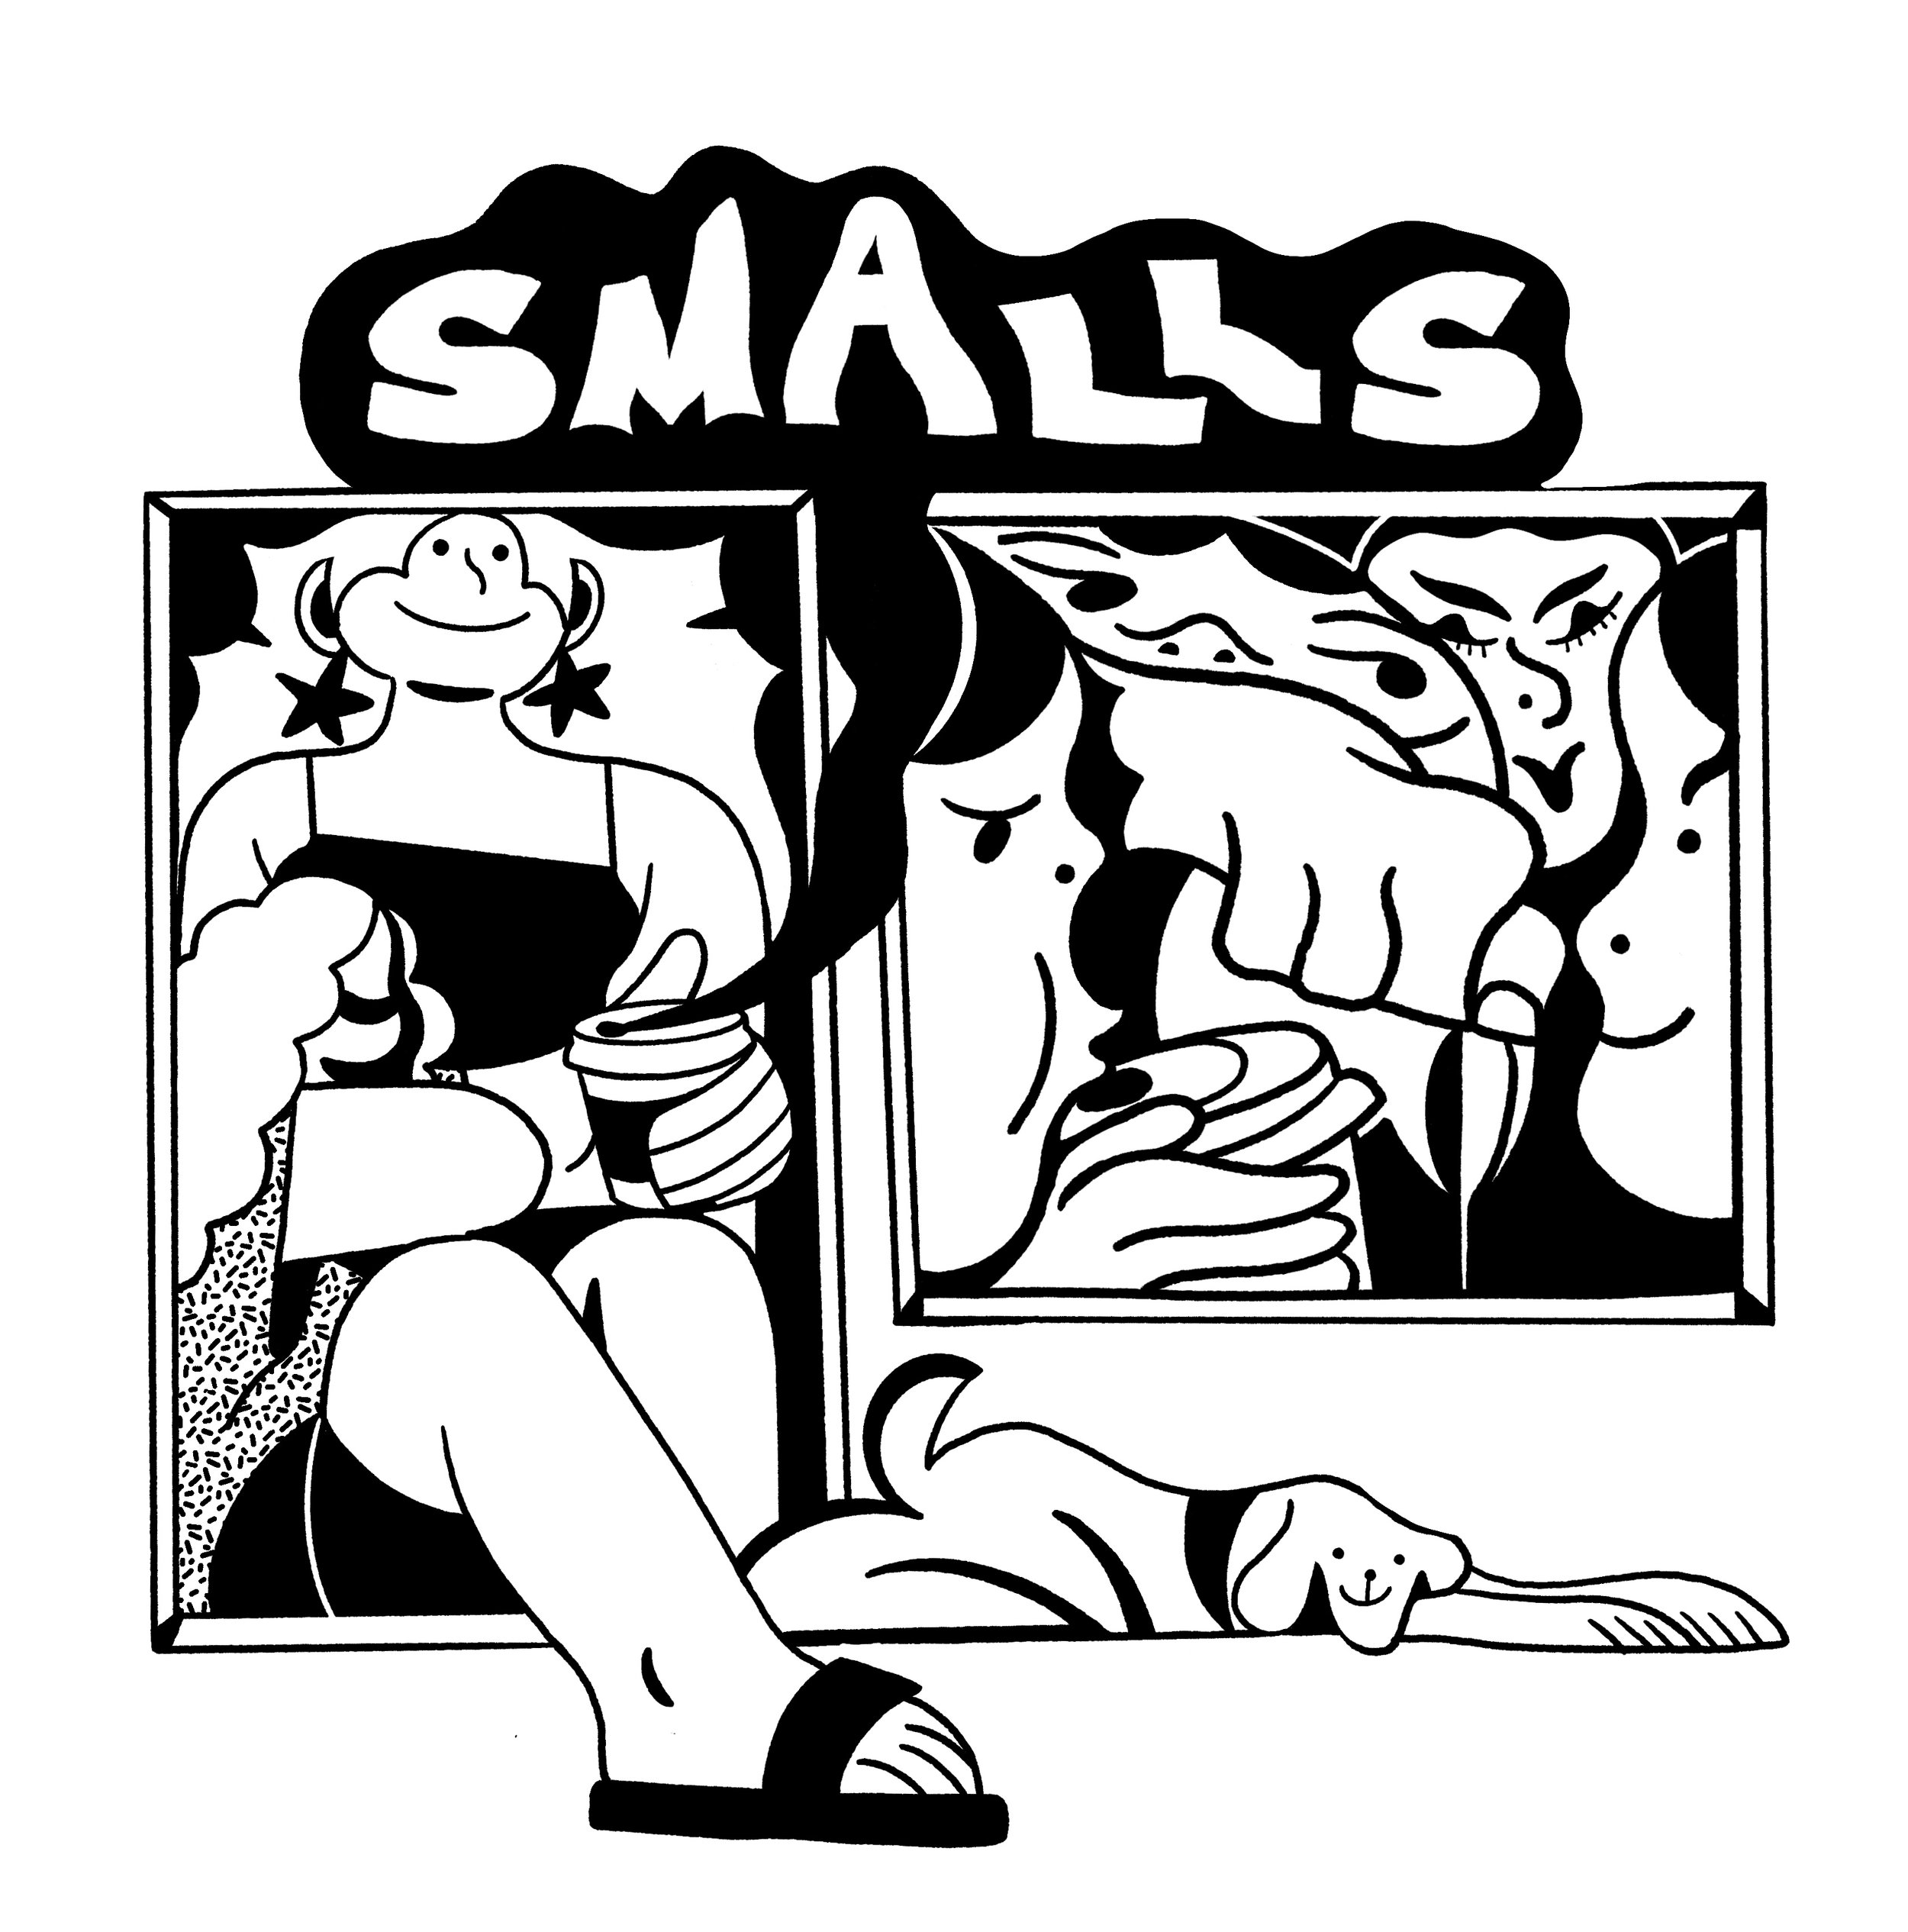 Smalls.jpg